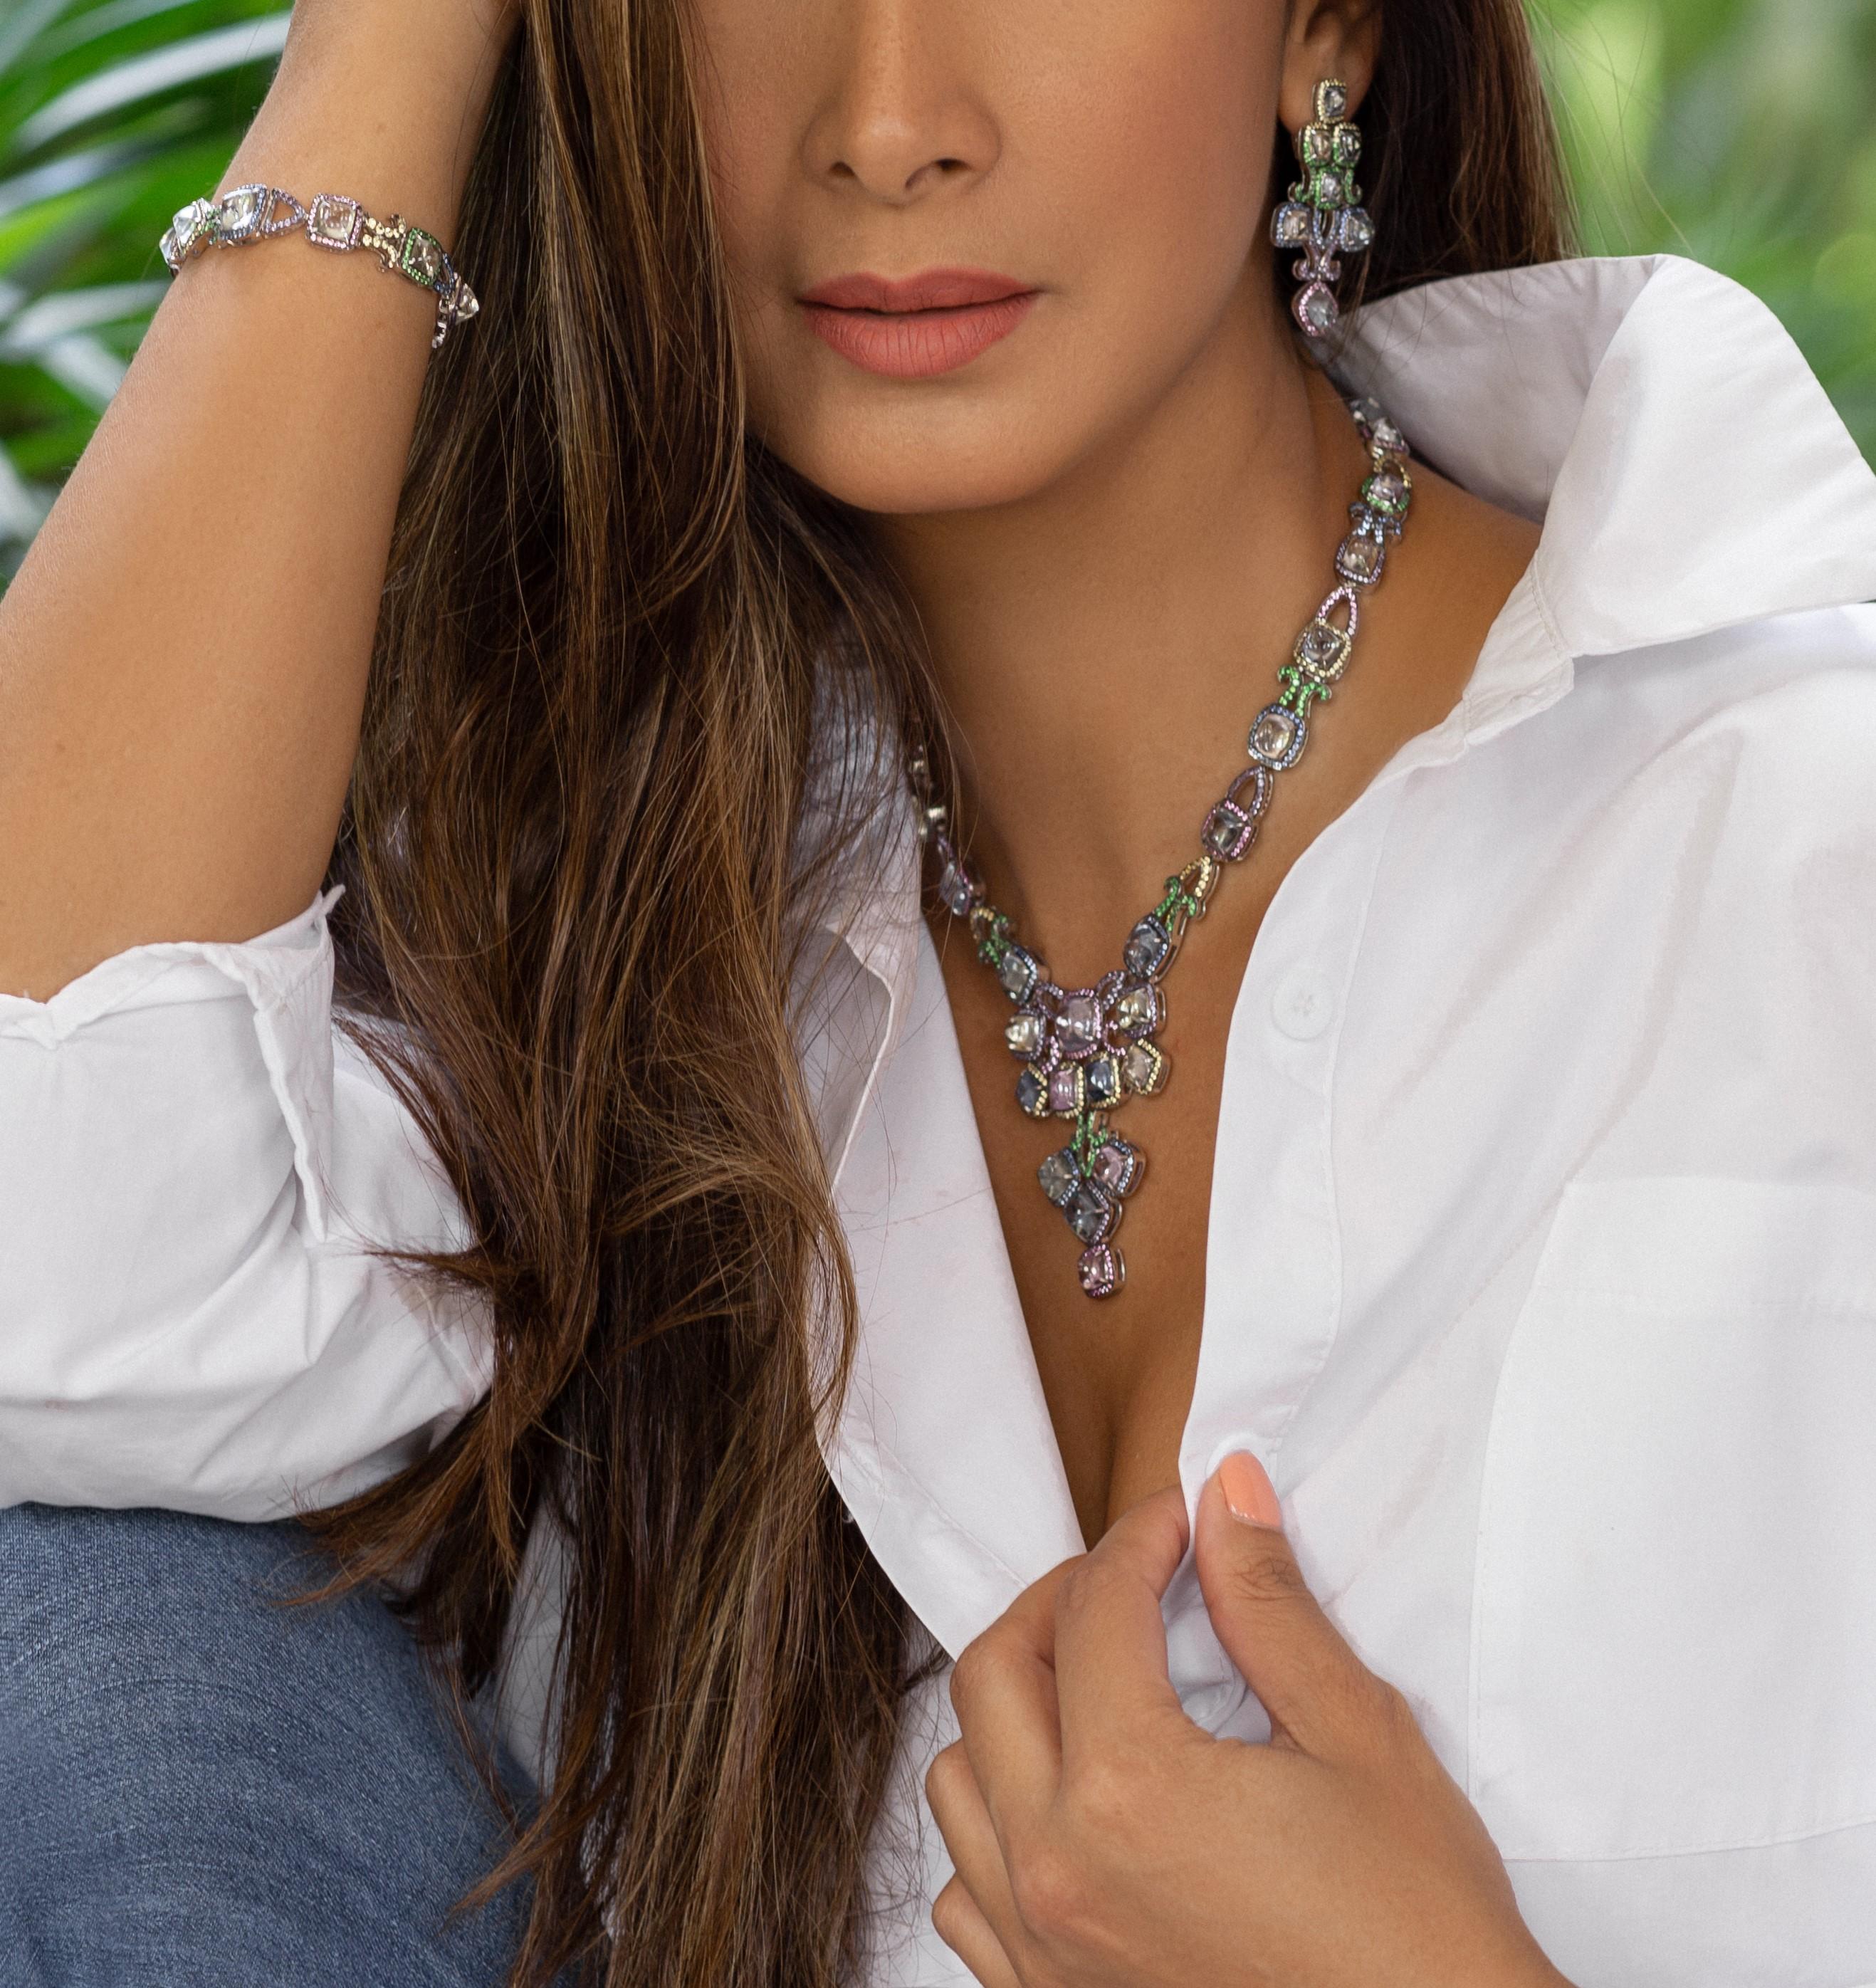 Women's 69.69 Carat Burmese Sugarloaf Sapphire Necklace Set in 18 Karat White Gold For Sale